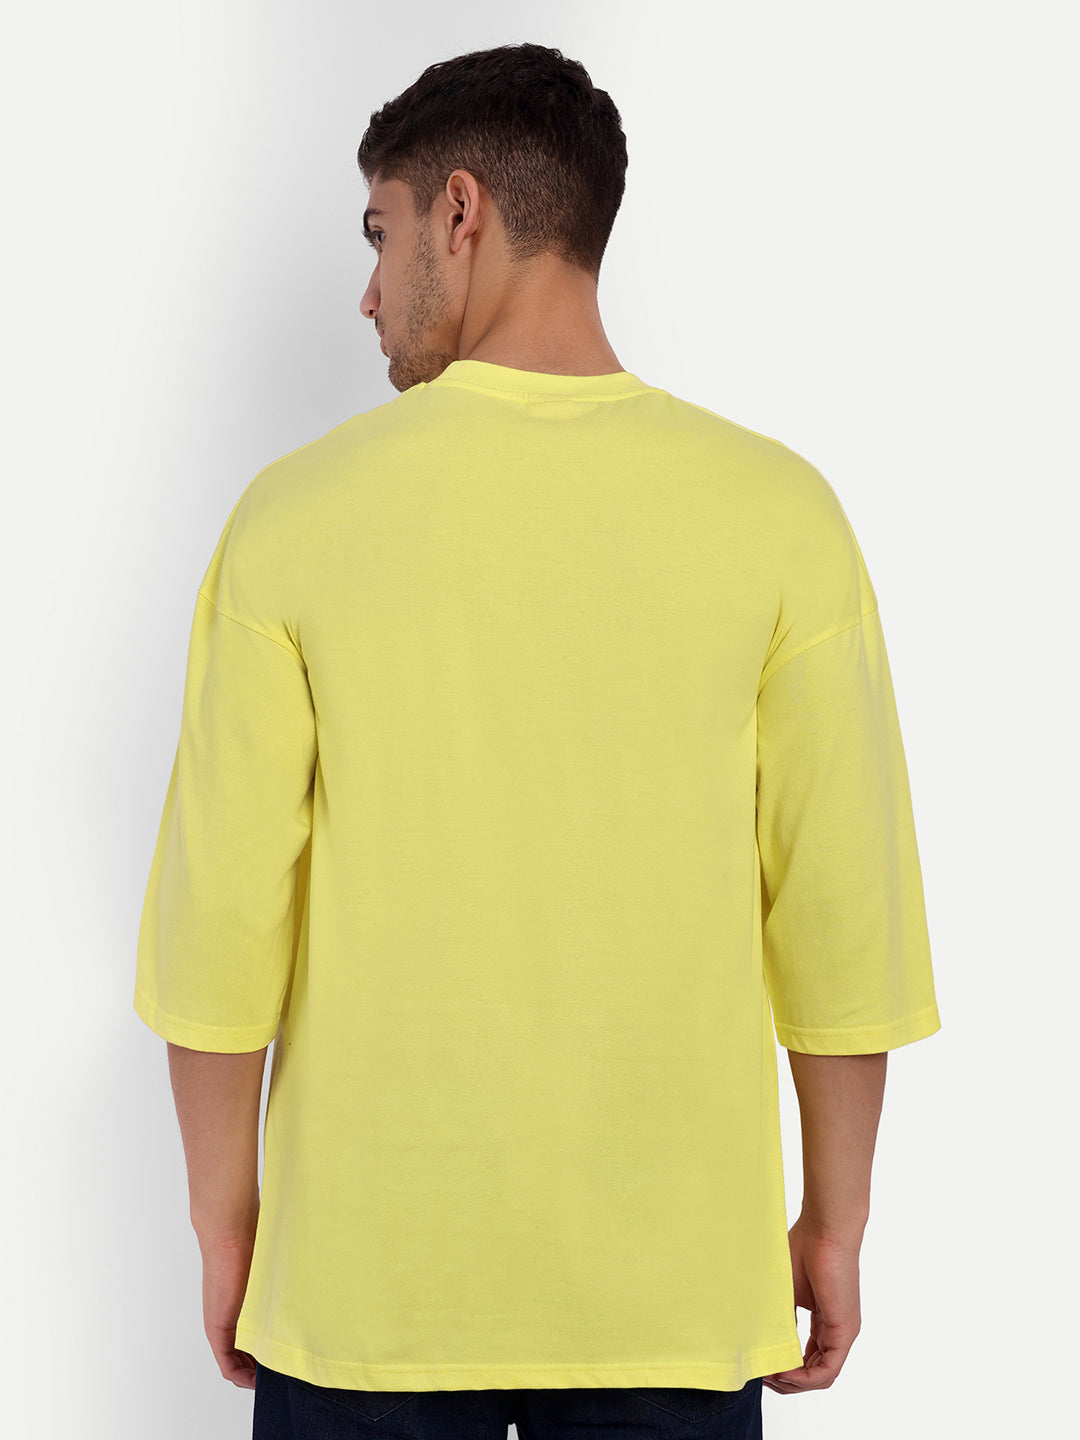 Naruto Lemon Yellow Oversized Drop Shoulder Unisex Tshirt By Gavin Paris